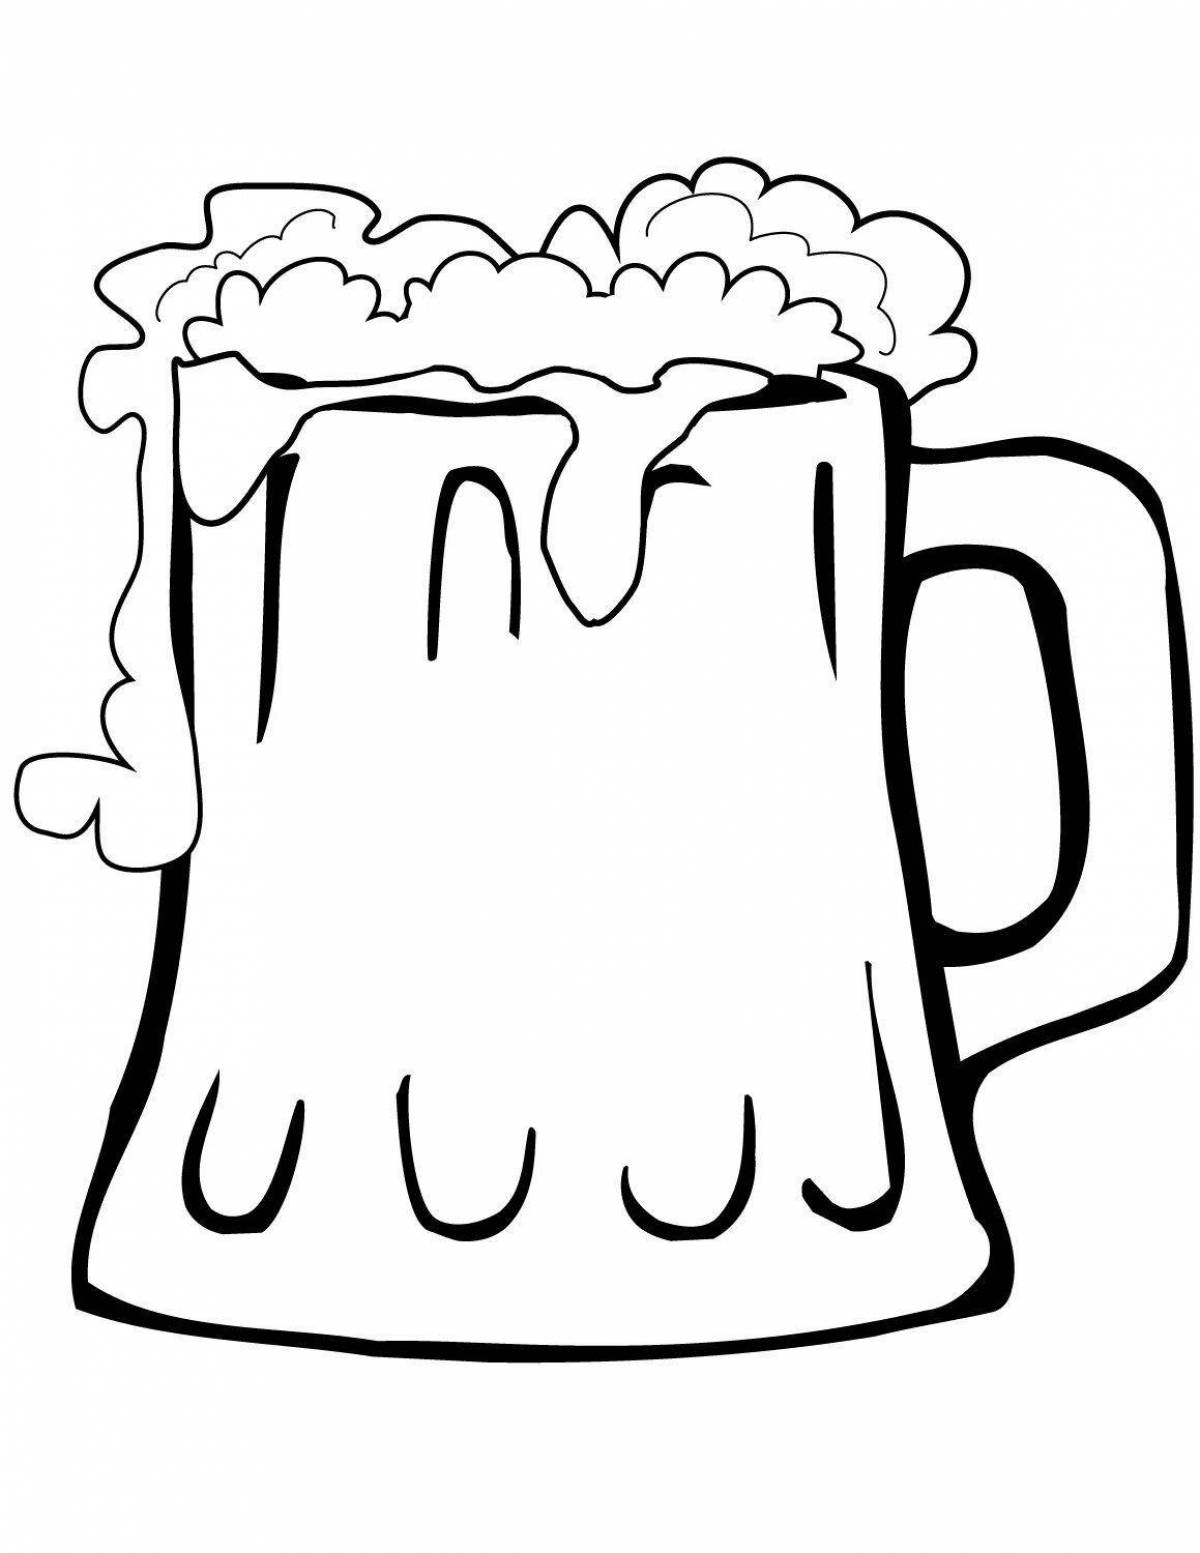 Кружка пива hoppy coloring page